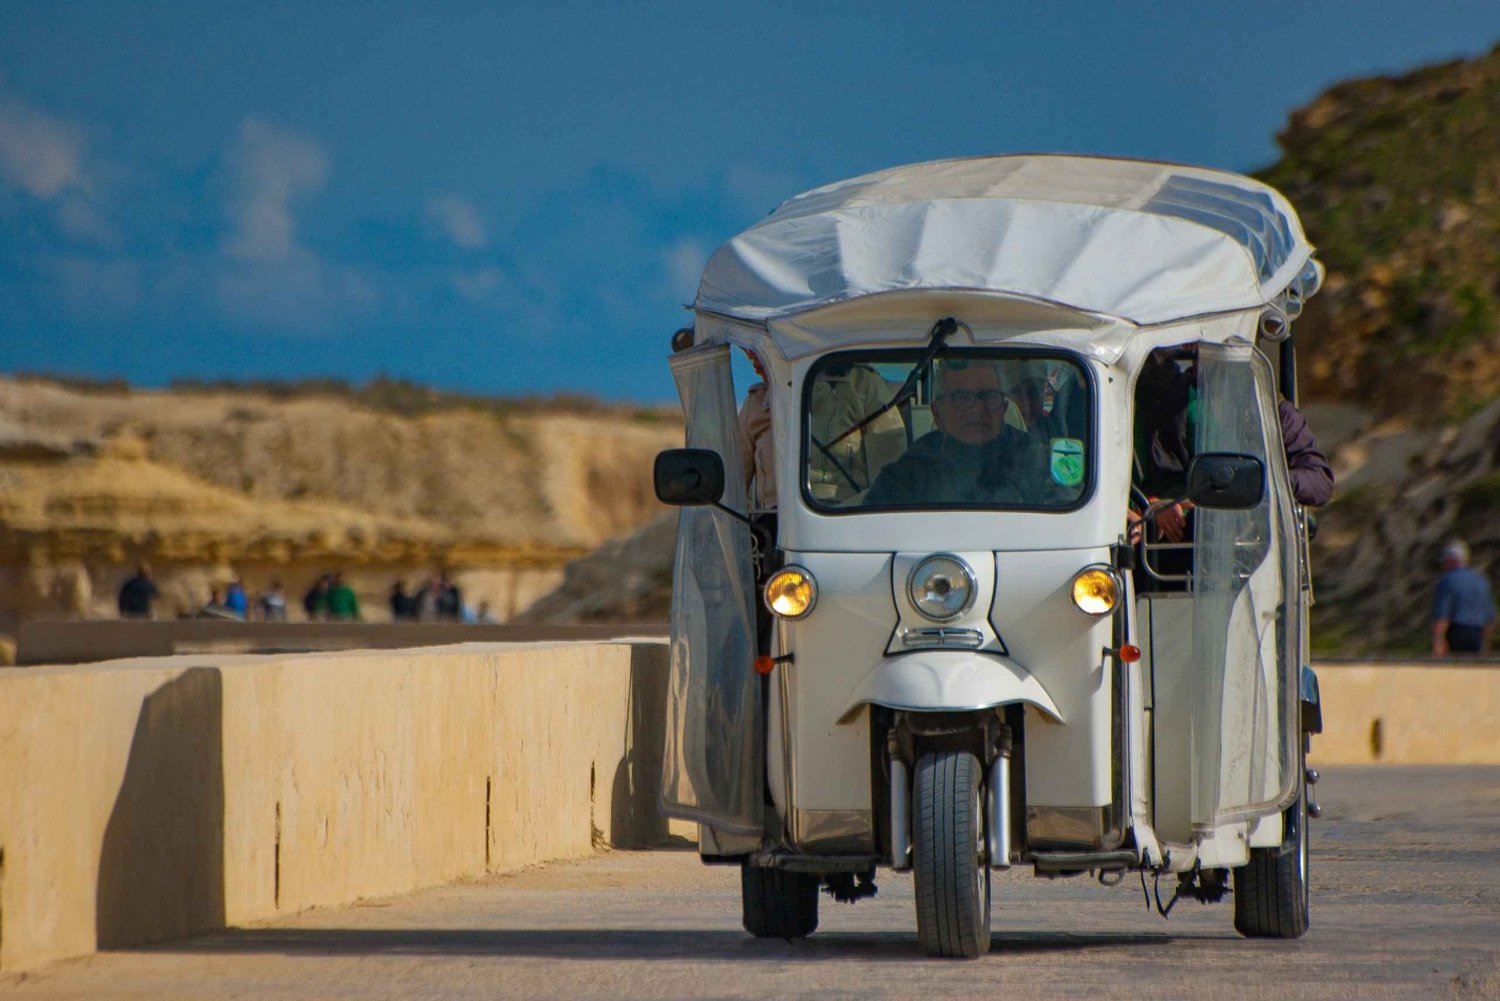 Gozo: Tour en Tuk Tuk de 6 horas con chófer privado